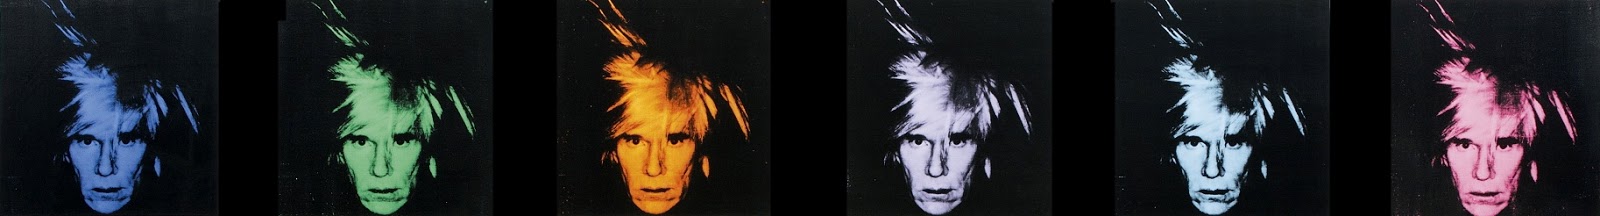 Andy+Warhol-1928-1987 (171).jpg